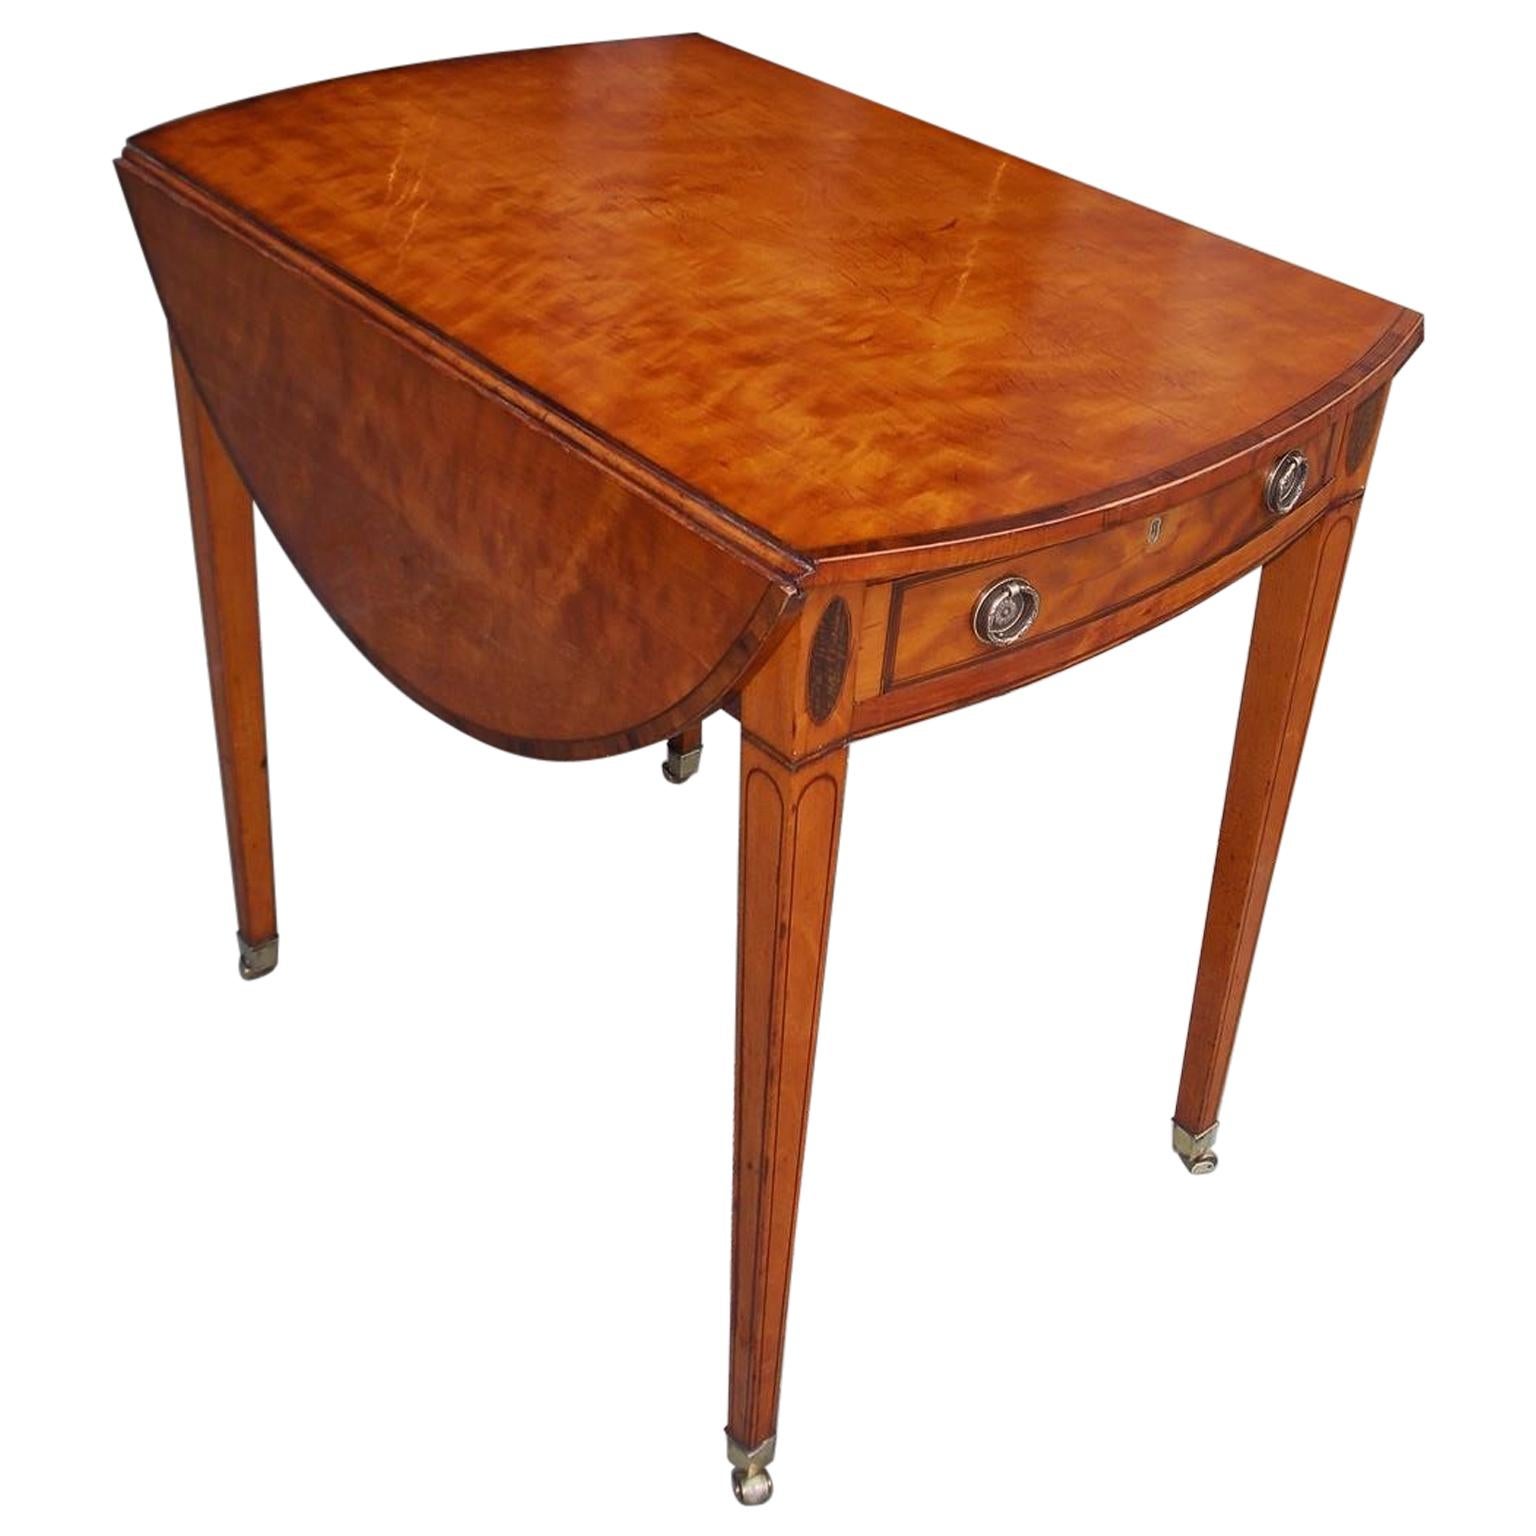 English Hepplewhite Oval Satinwood and Ebony Inlaid Pembroke Table, Circa 1790